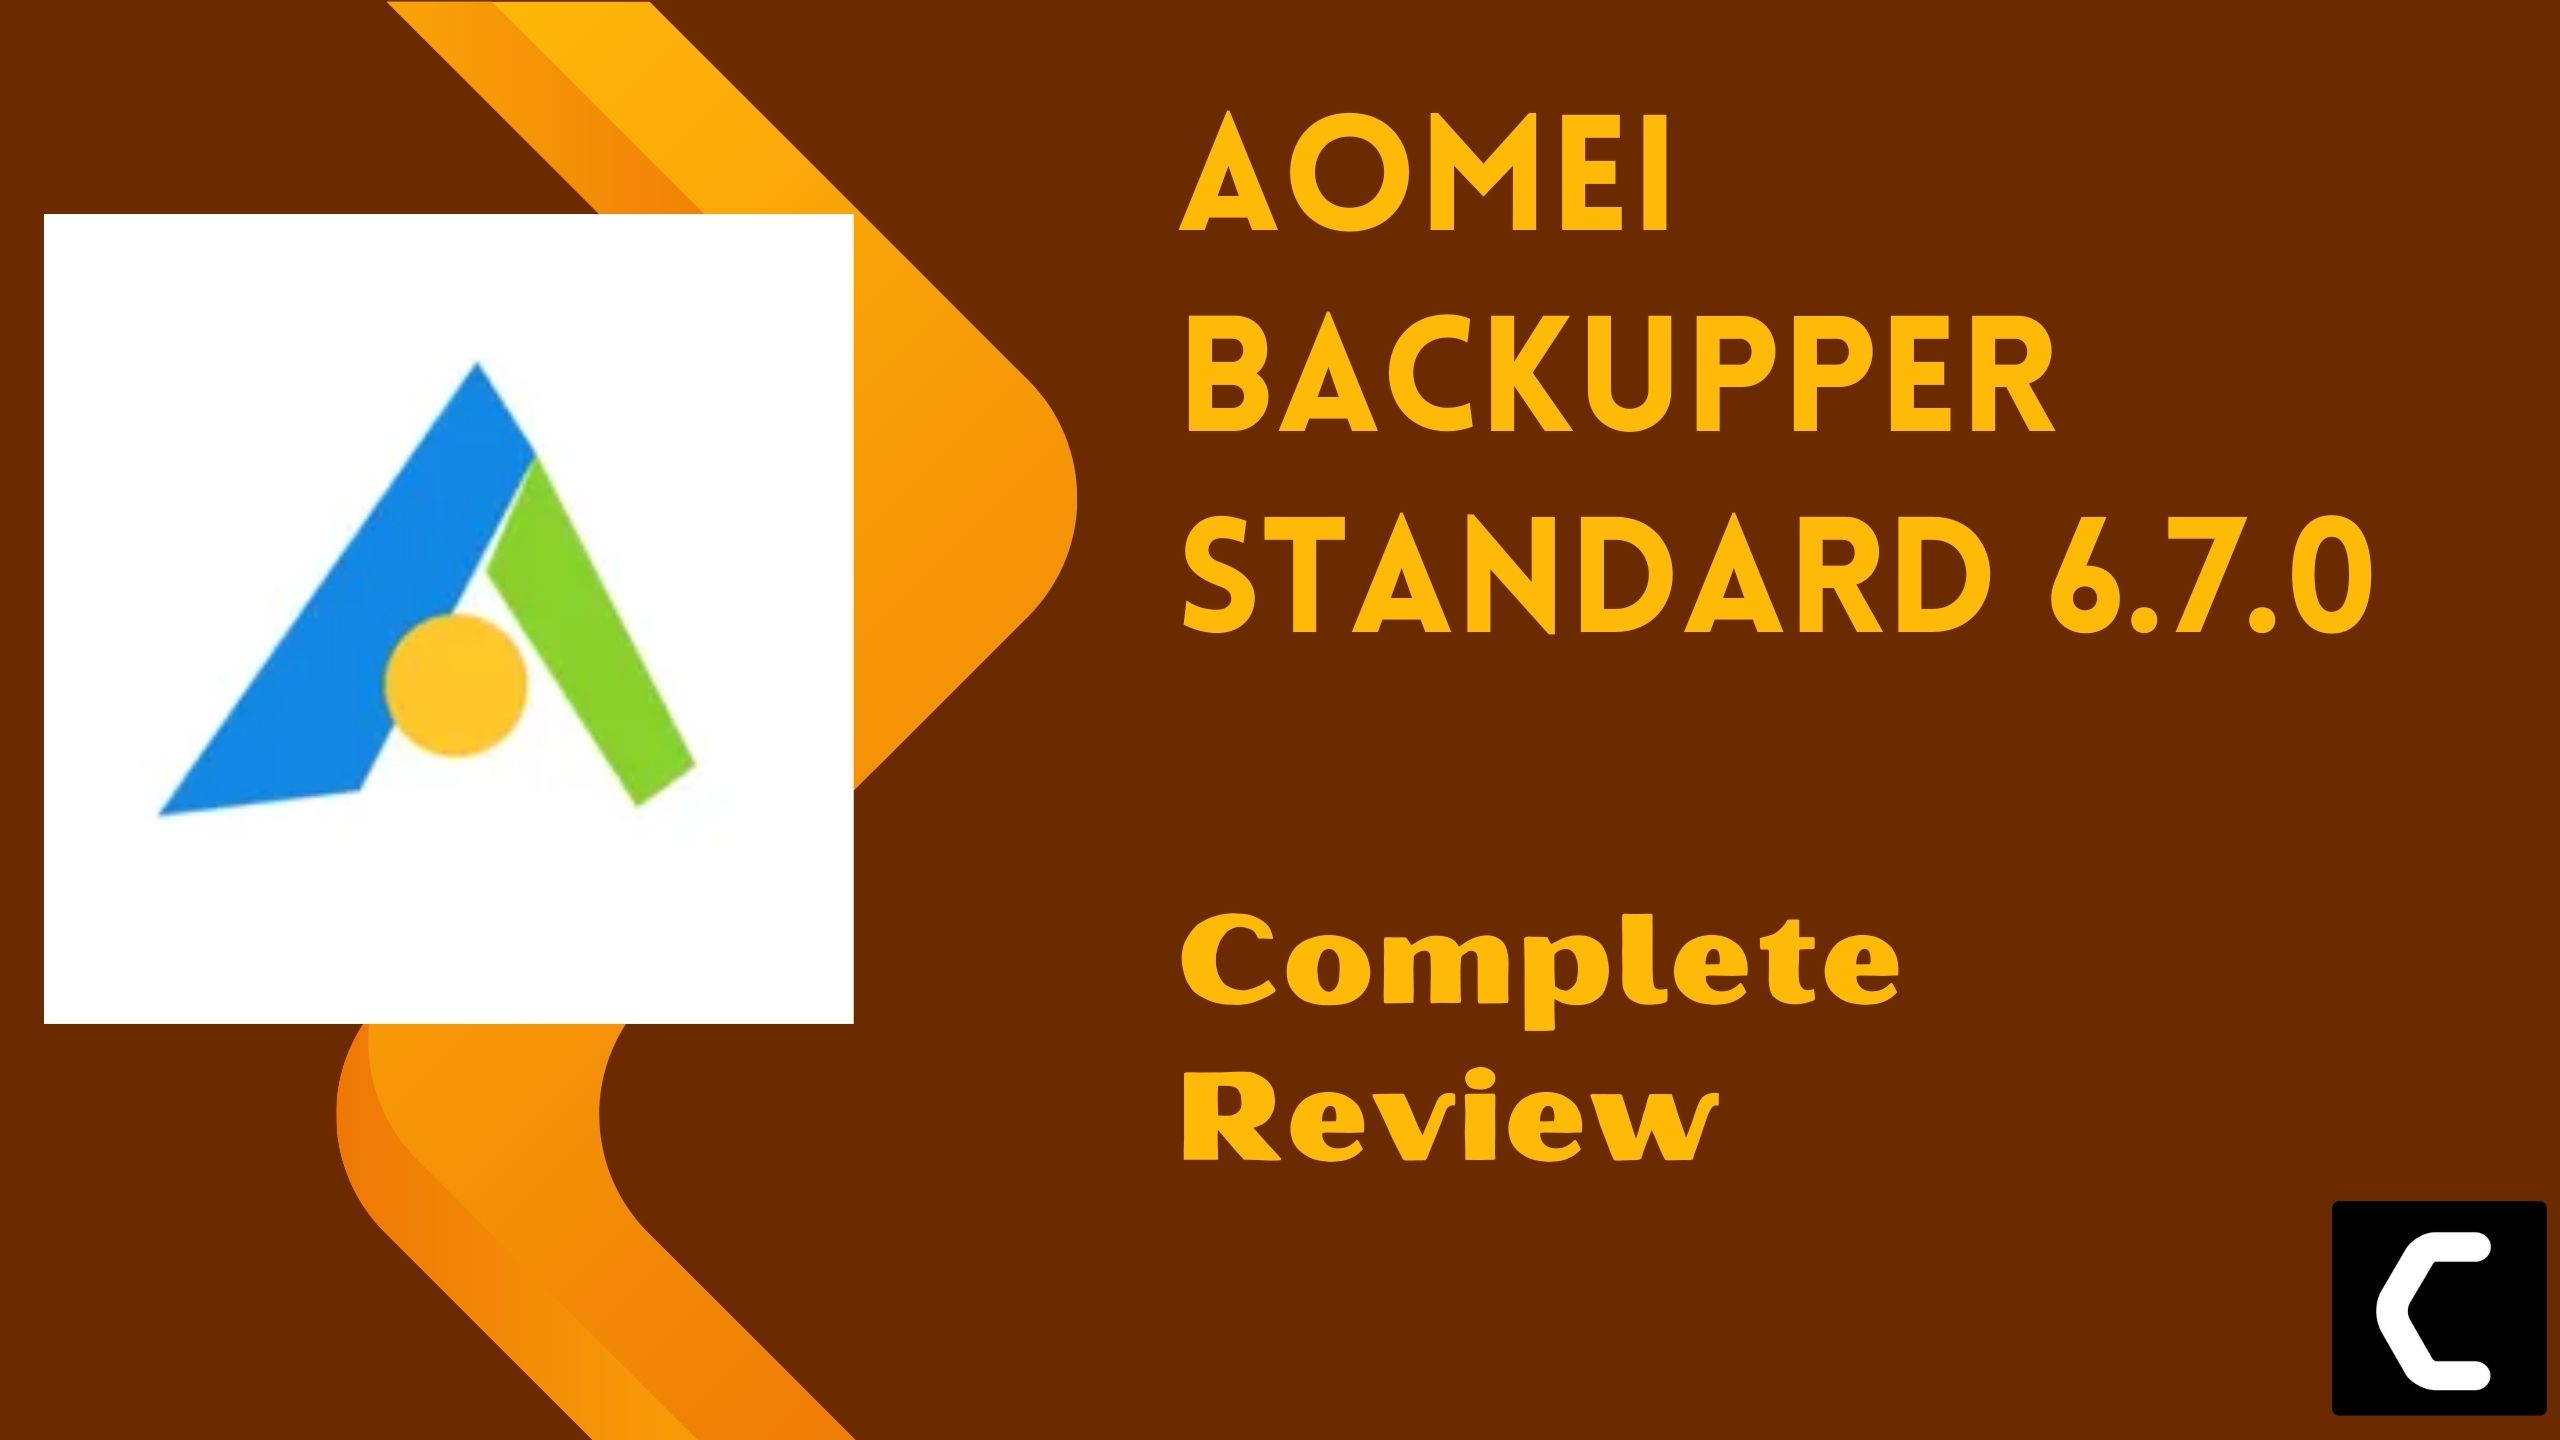 AOMEI Backupper Standard 6.7.0 – Complete Review